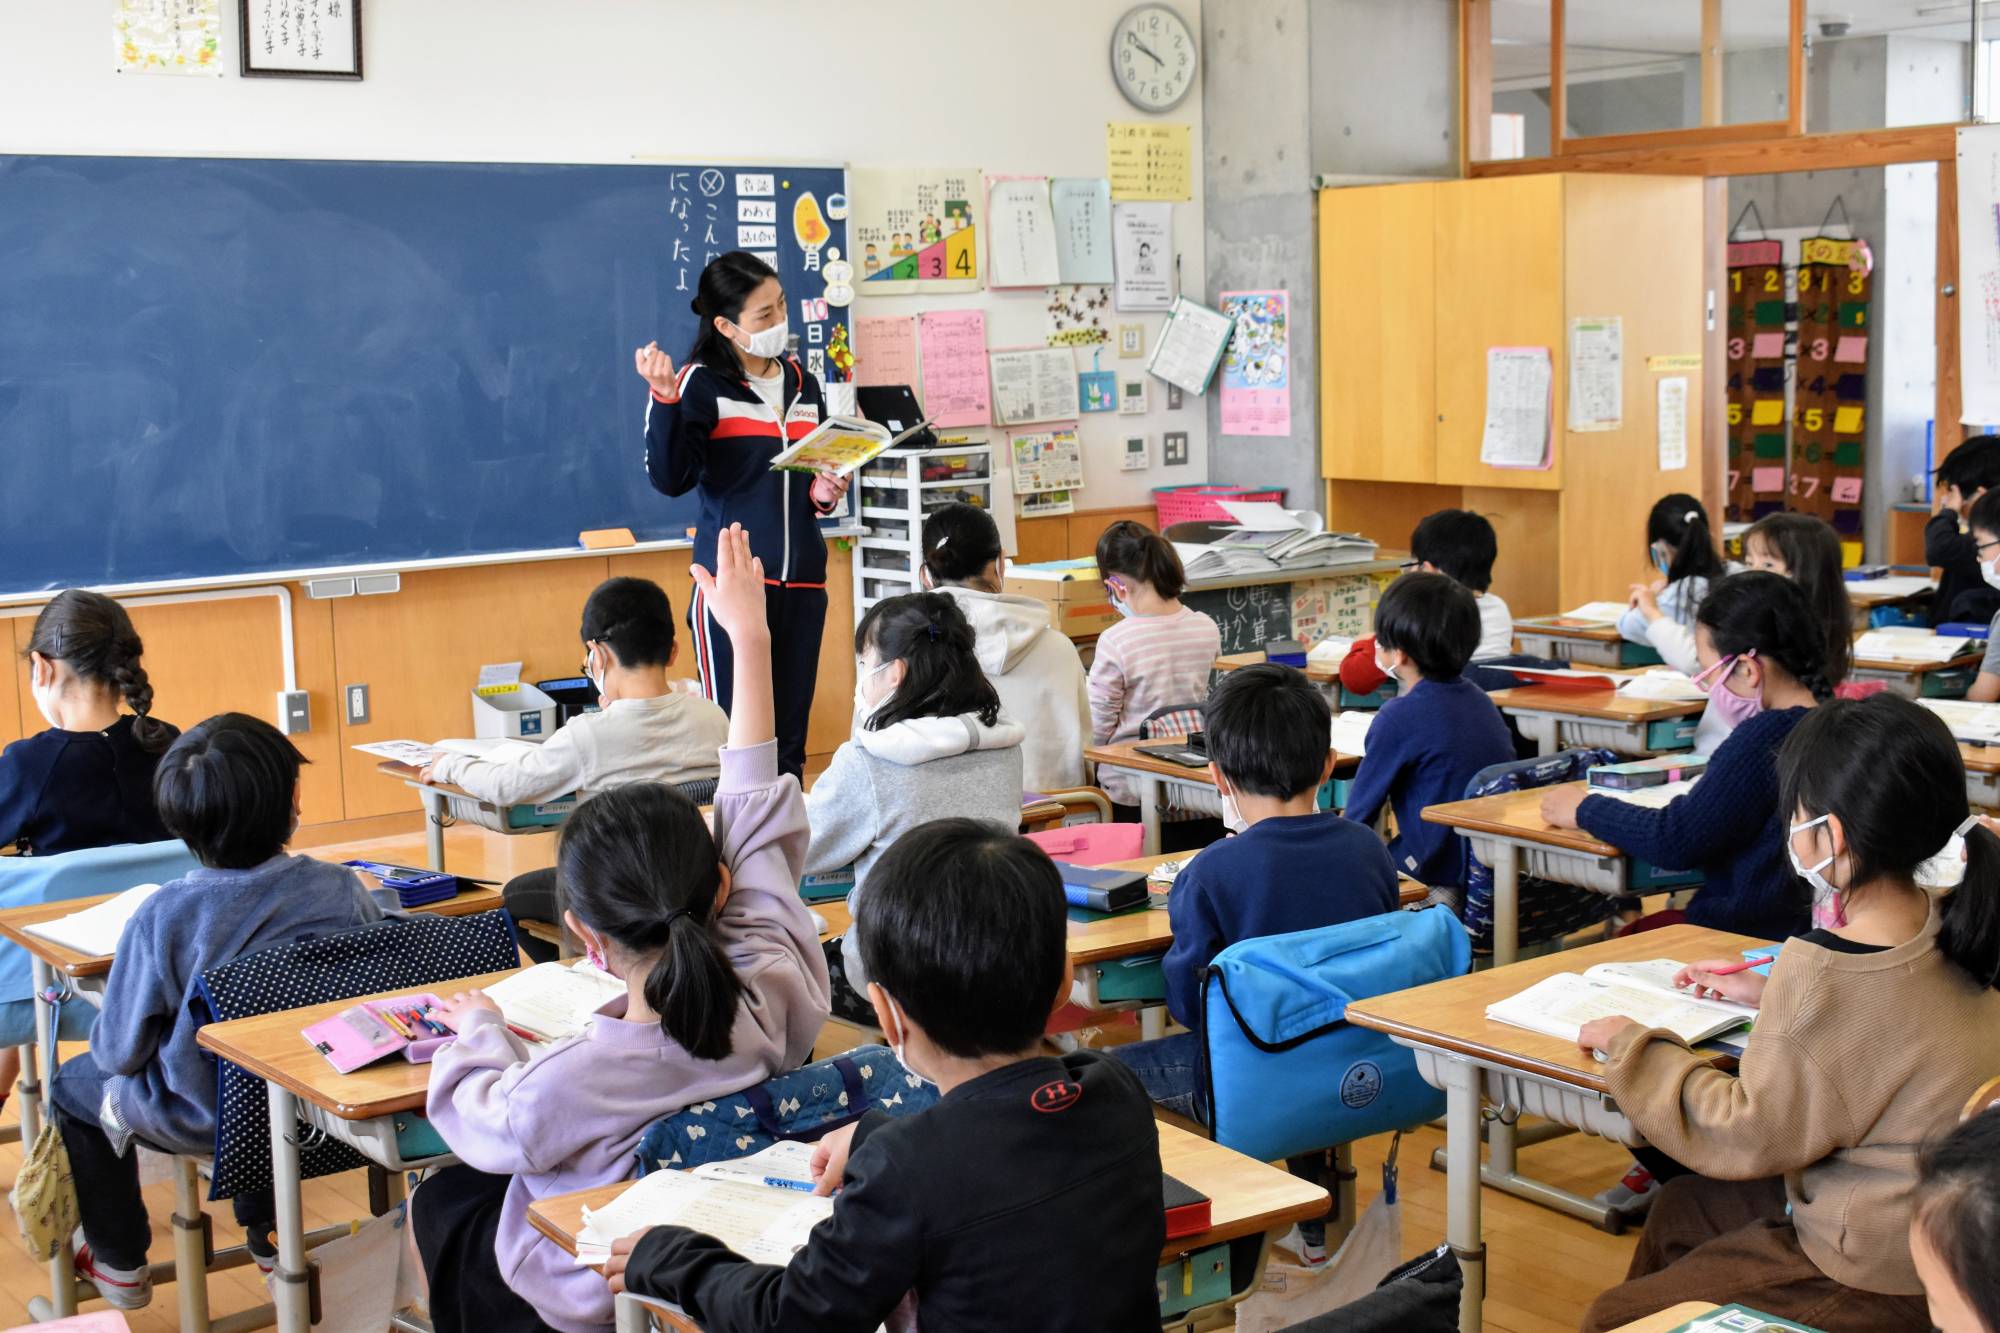 Japan Kauri Education Trust - <<NEW JAPANESE CLASS FOR ADULT